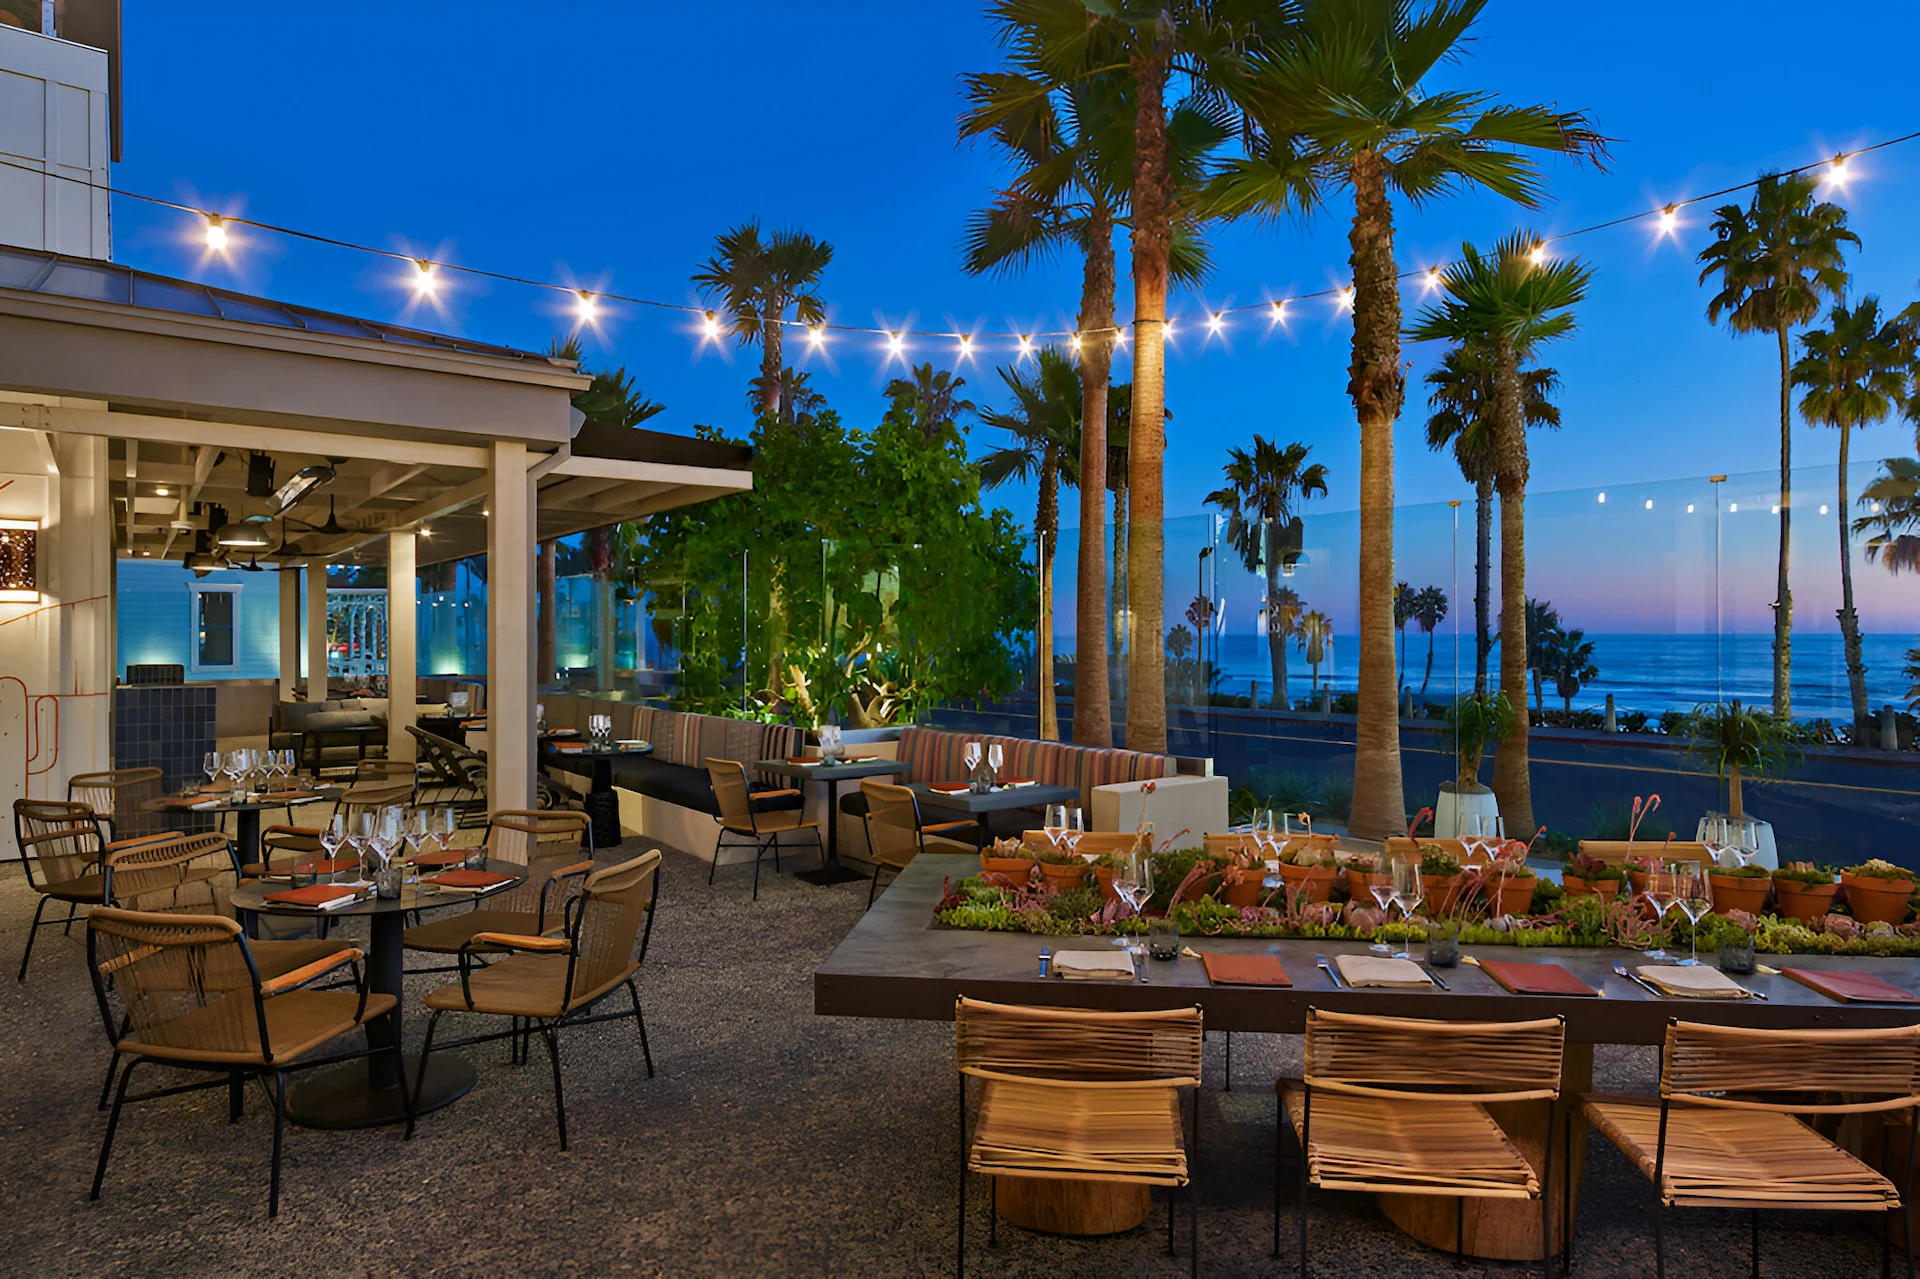 Luxurious terrace of Valle restaurant at dusk overlooking the beach